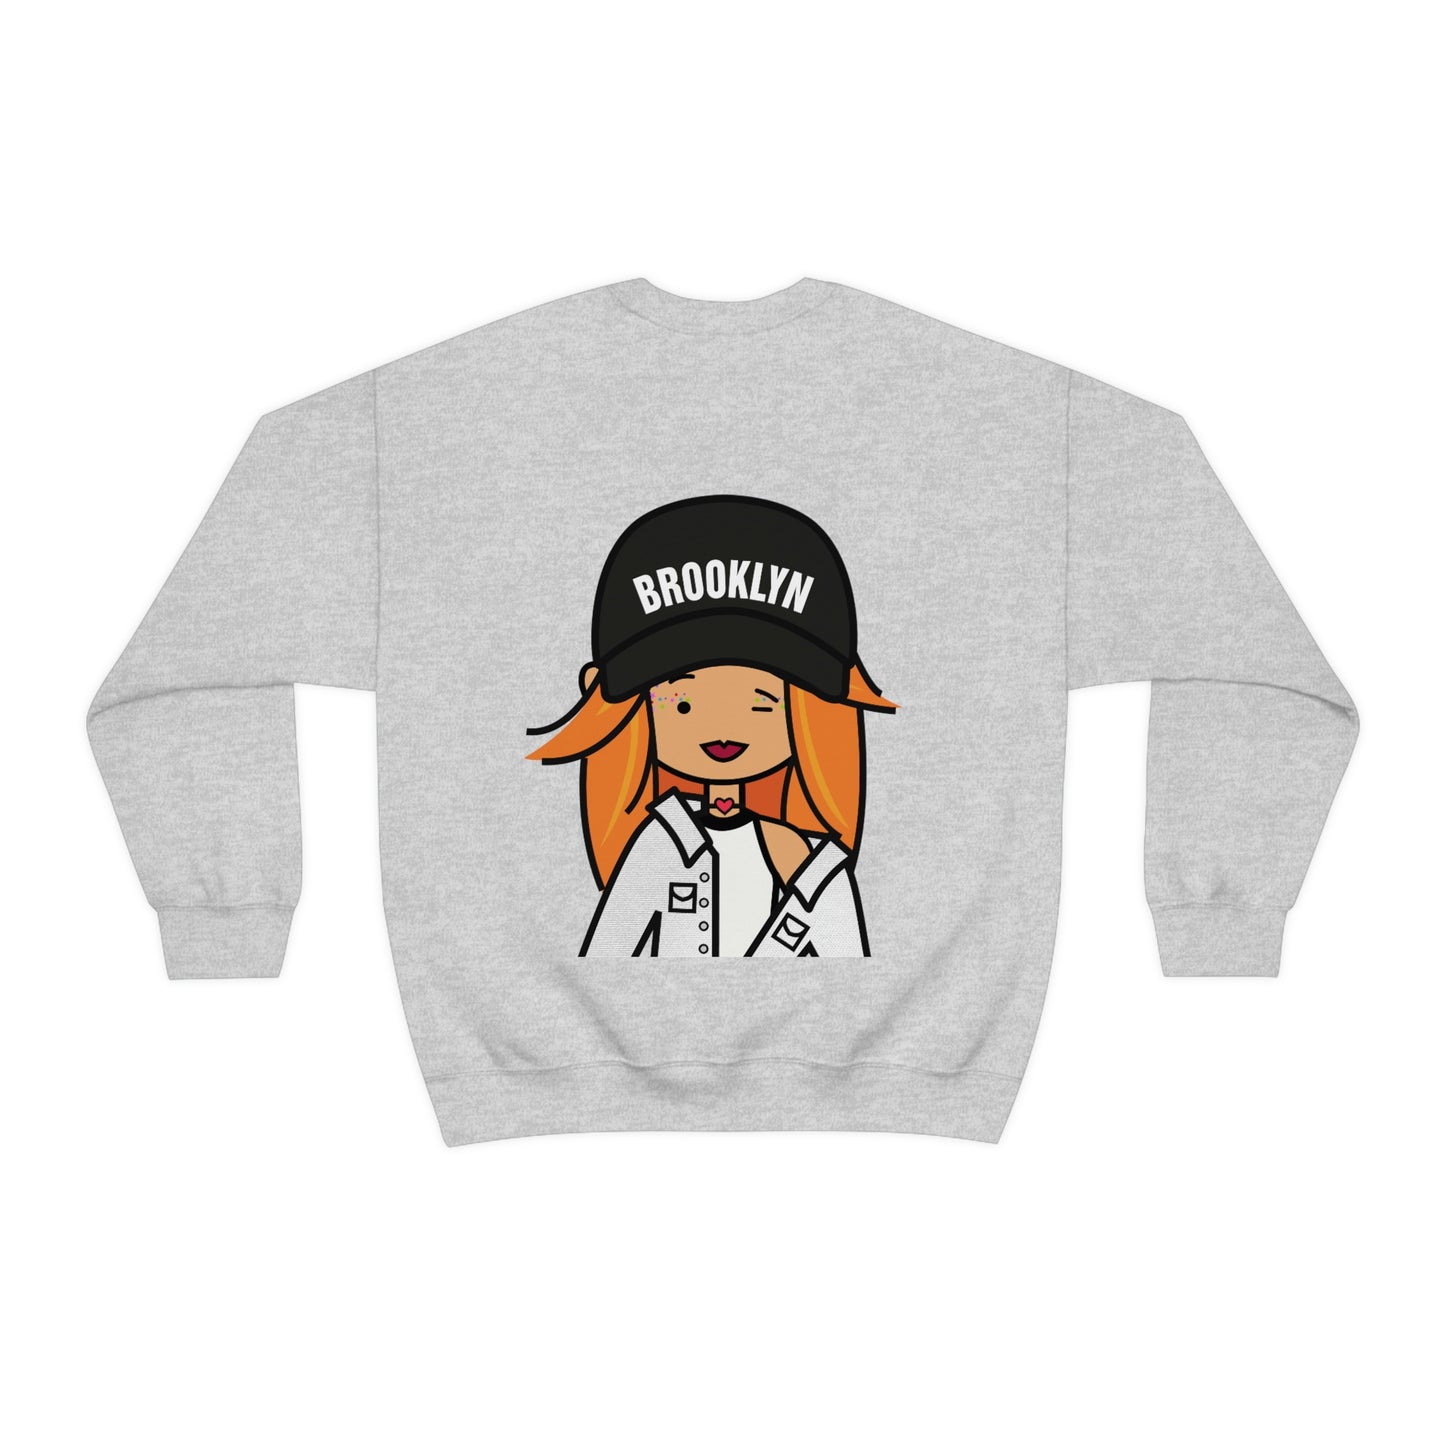 Brooklyn Cool Girl on sweatshirt, Miss O Cool Girls brand